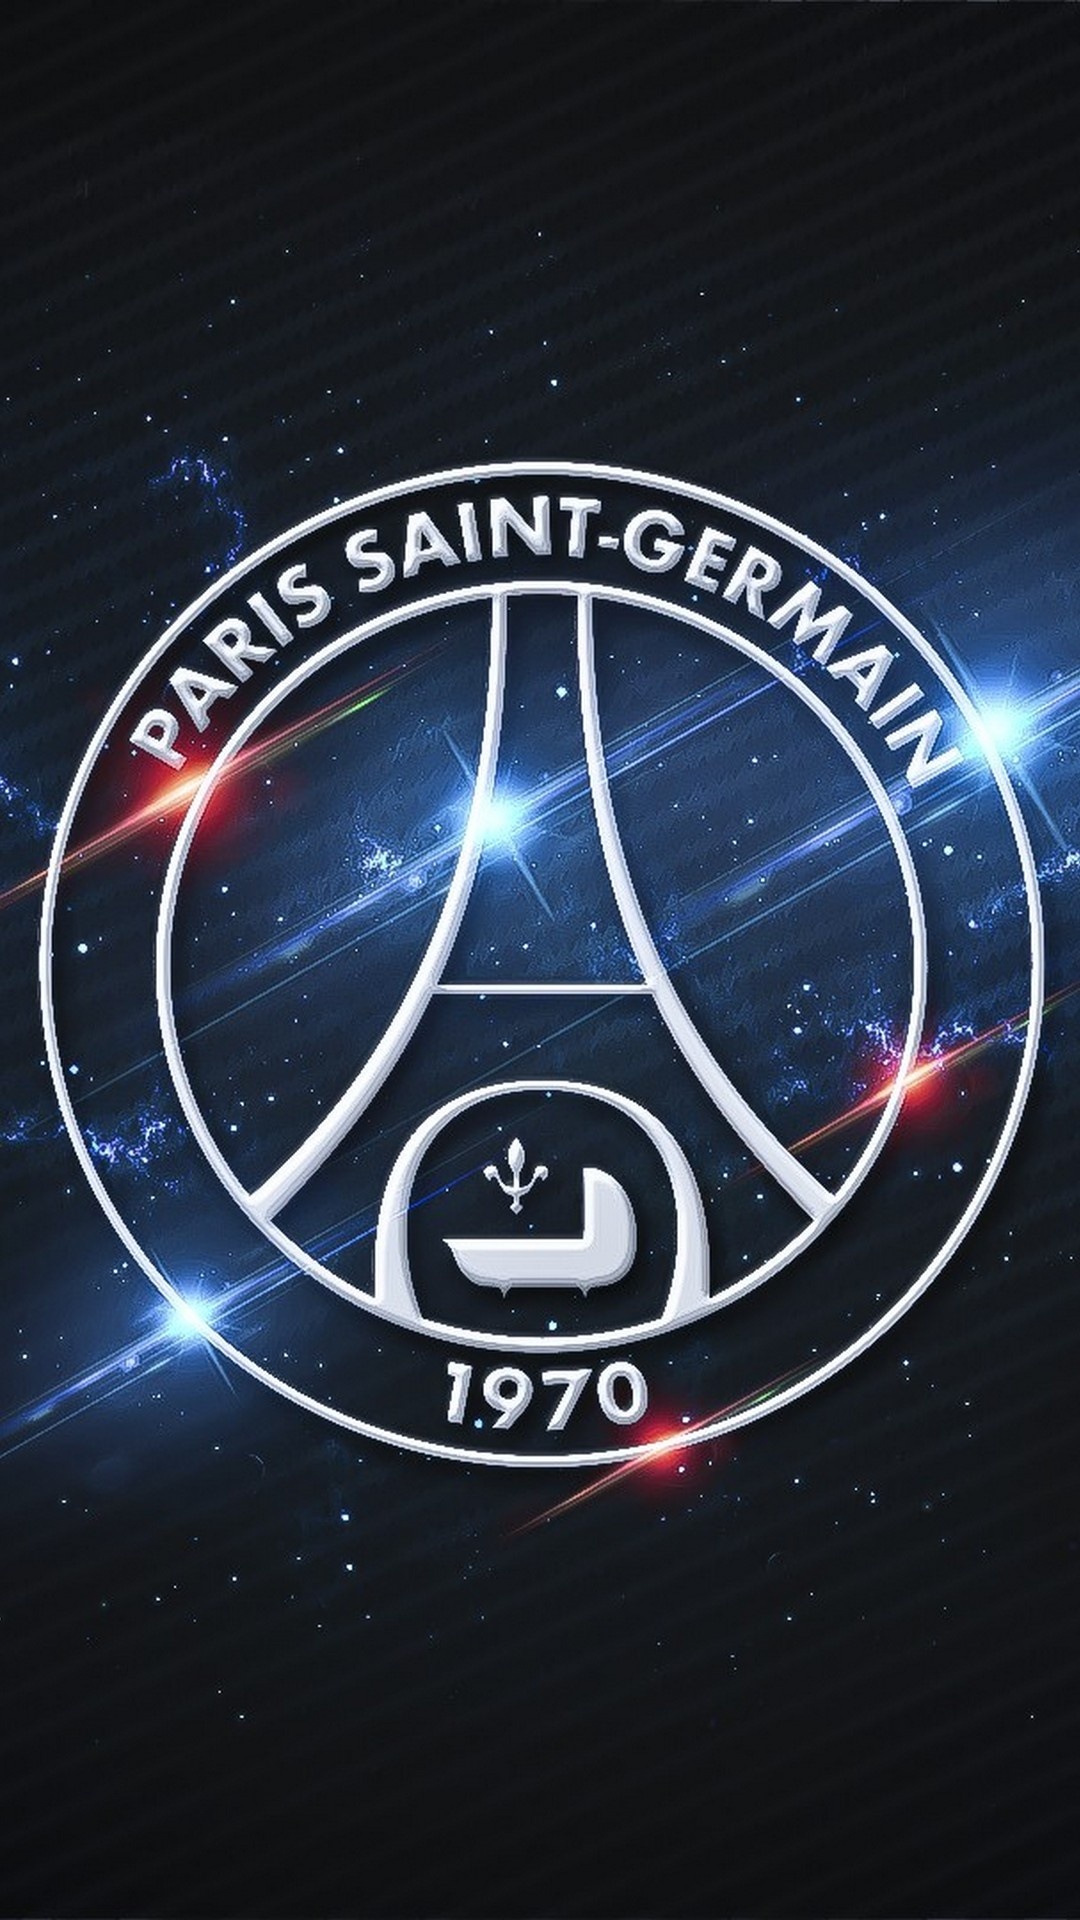 Paris Saint-Germain: Their mascot is Germain the Lynx. 1080x1920 Full HD Wallpaper.